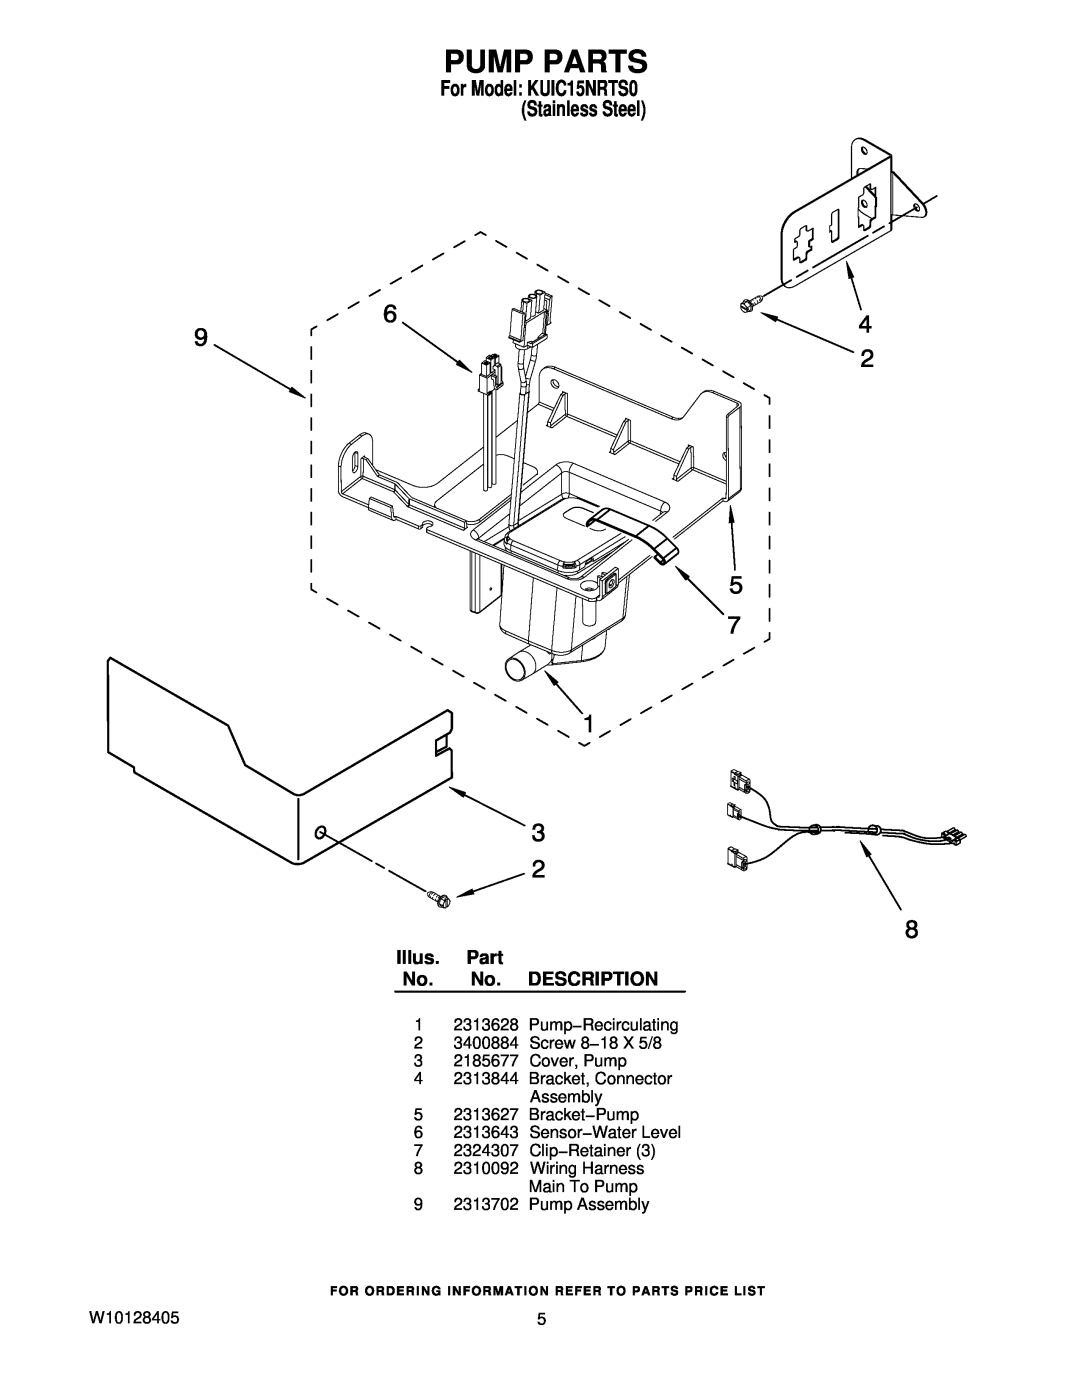 KitchenAid manual Pump Parts, Illus. Part No. No. DESCRIPTION, For Model KUIC15NRTS0 Stainless Steel 